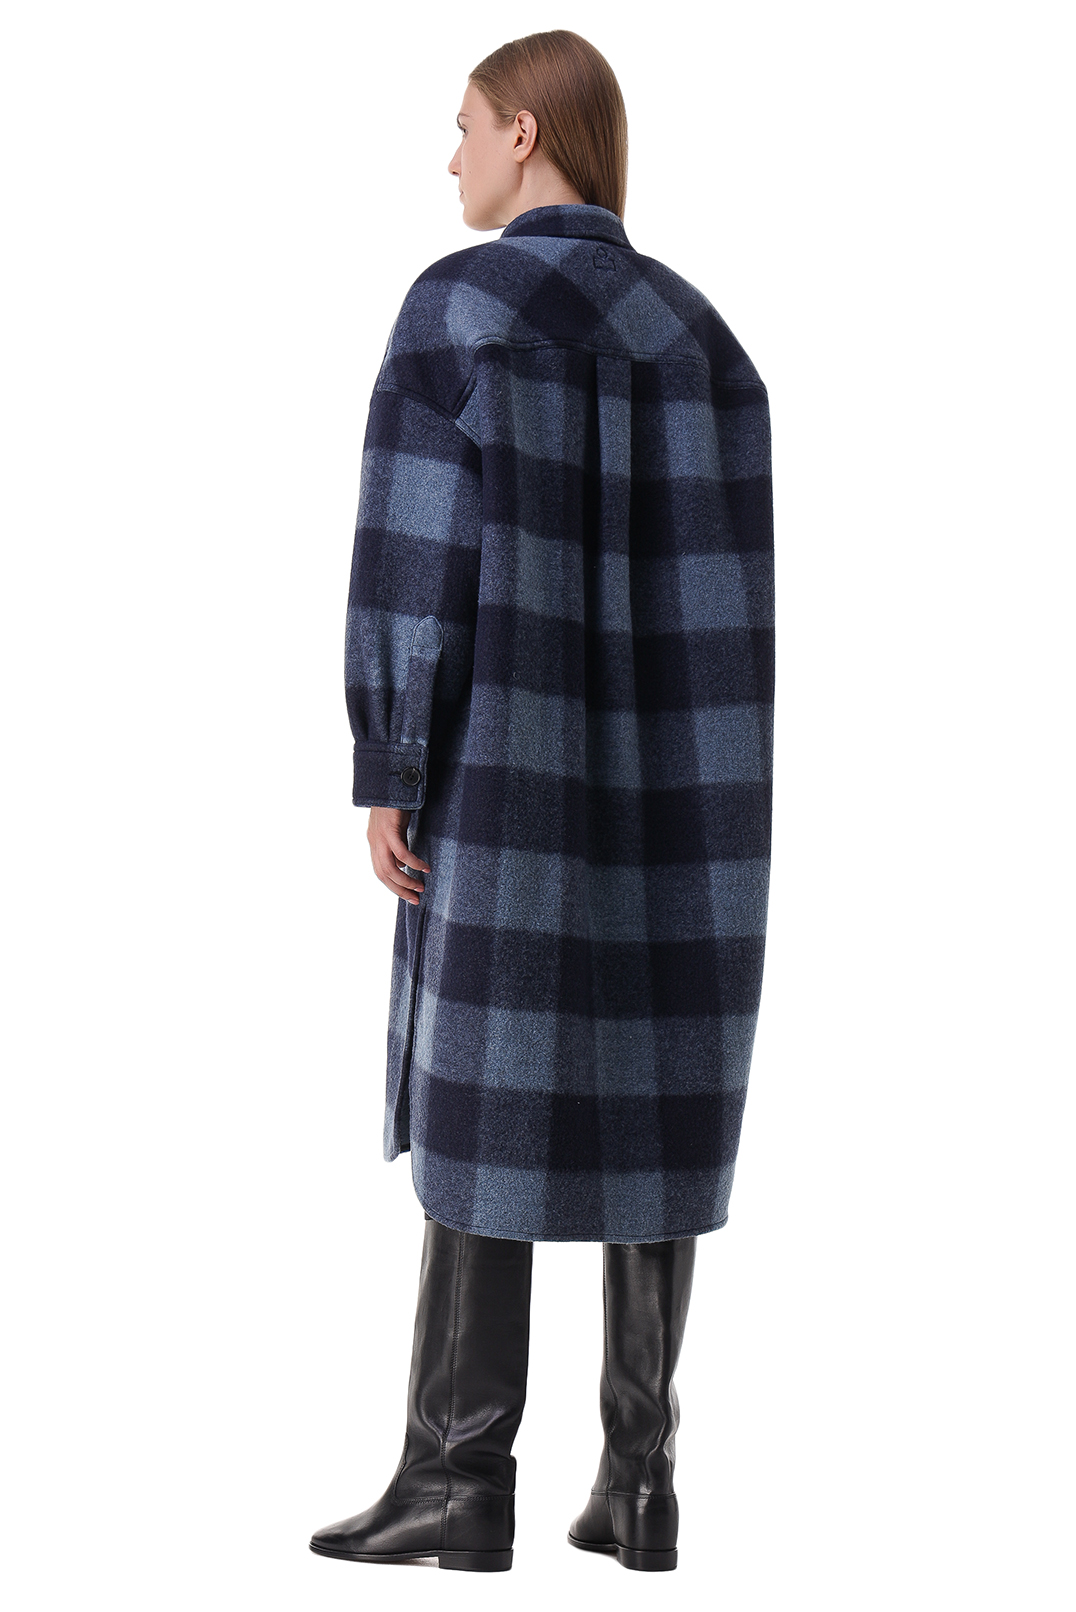 Пальто oversize в клітку MARANT ETOILE ETOI21014